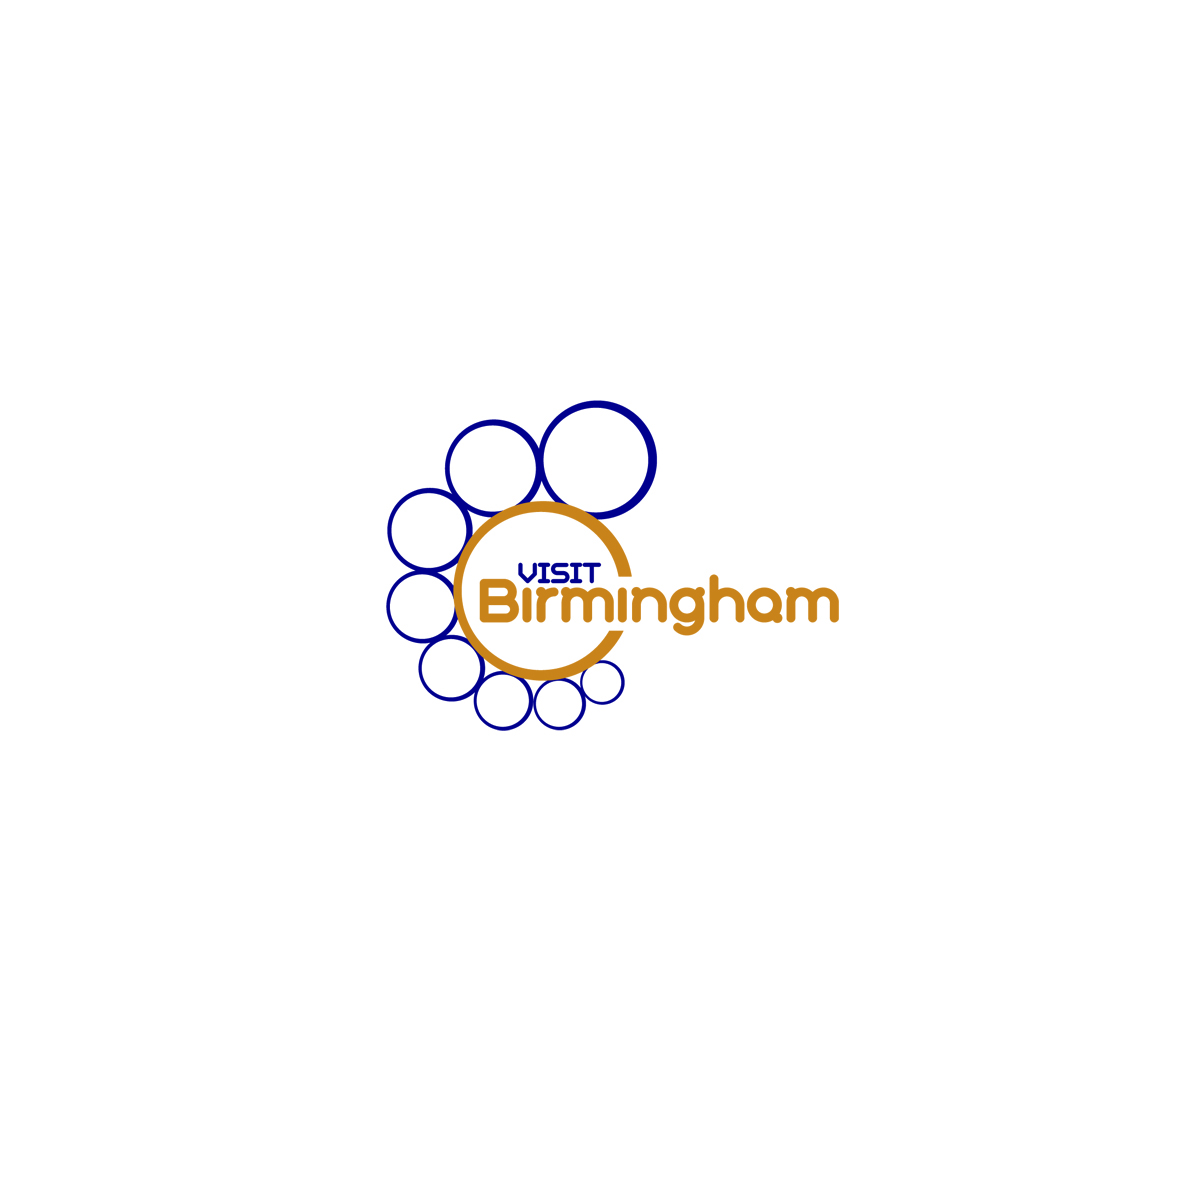 Vivideye Blog: Visit Birmingham Logo